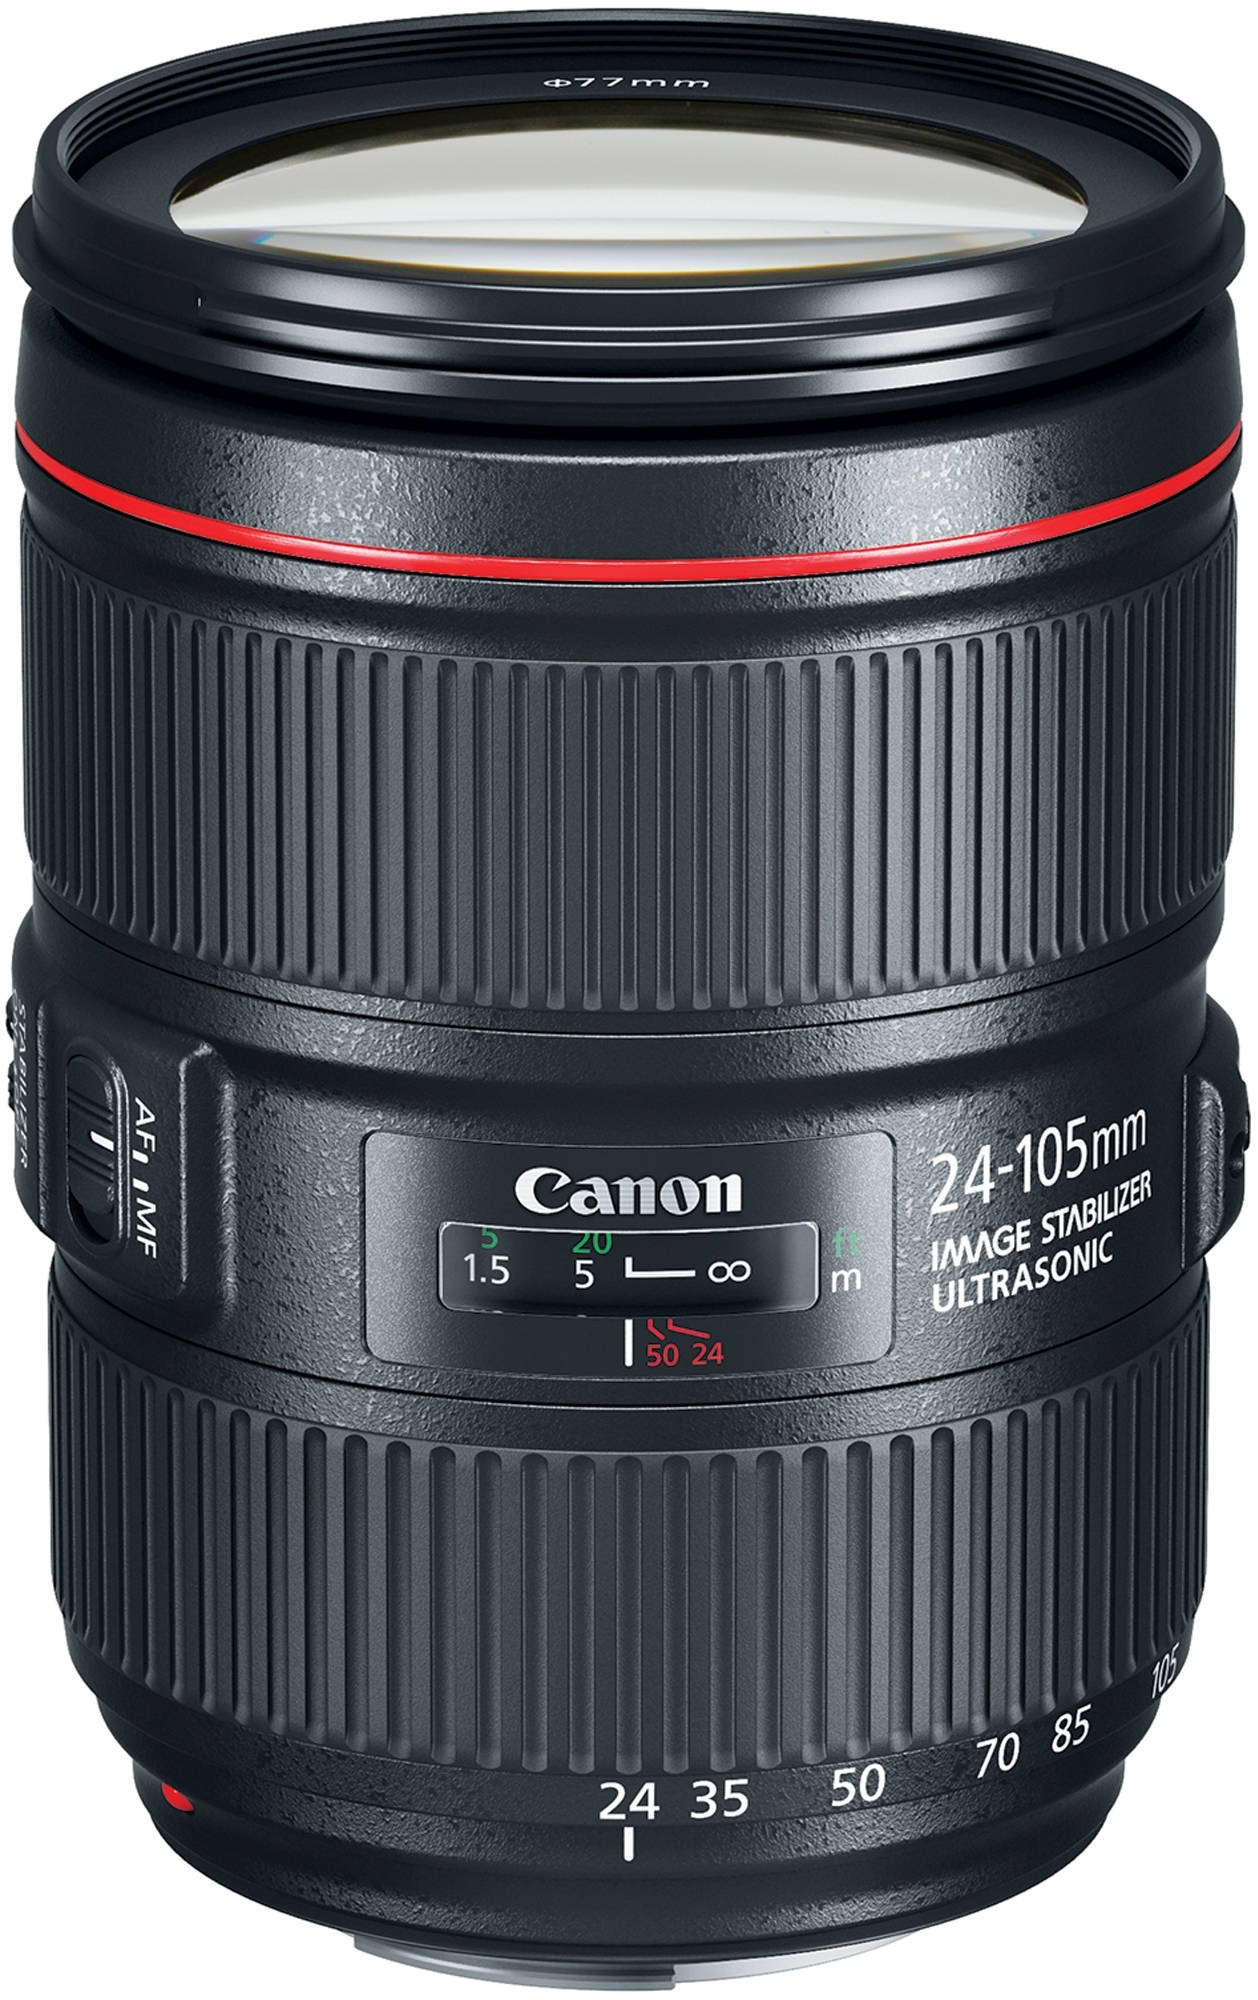 Canon - Objectif Ef 24-105 Mm F/4 L Is Ii Usm - Zoom Standard De Serie L - Stabilisateur D'image Optique